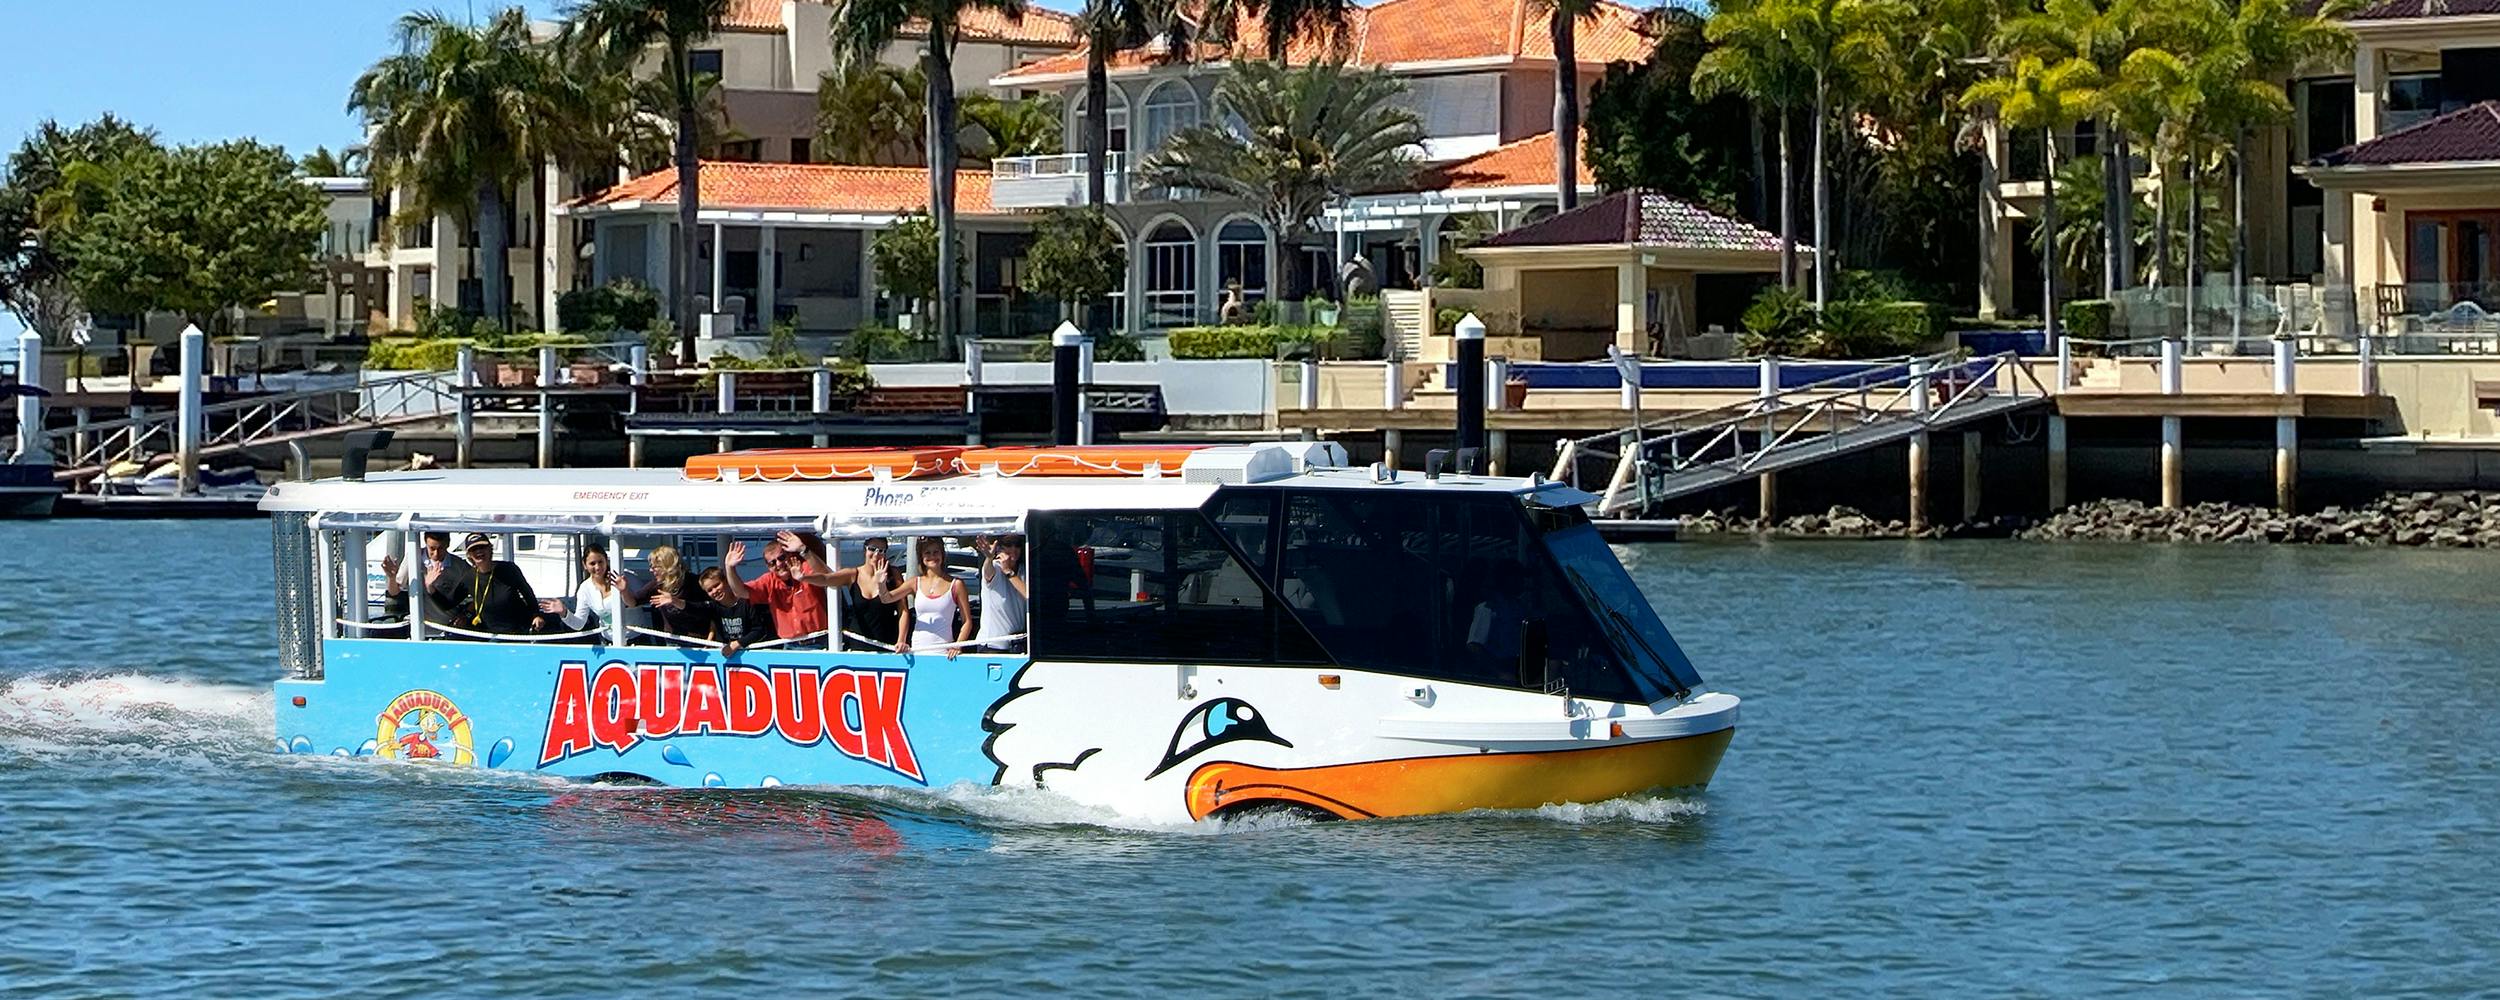 Aquaduck Sunshine Coast 1 Hour City Tour and River Cruise